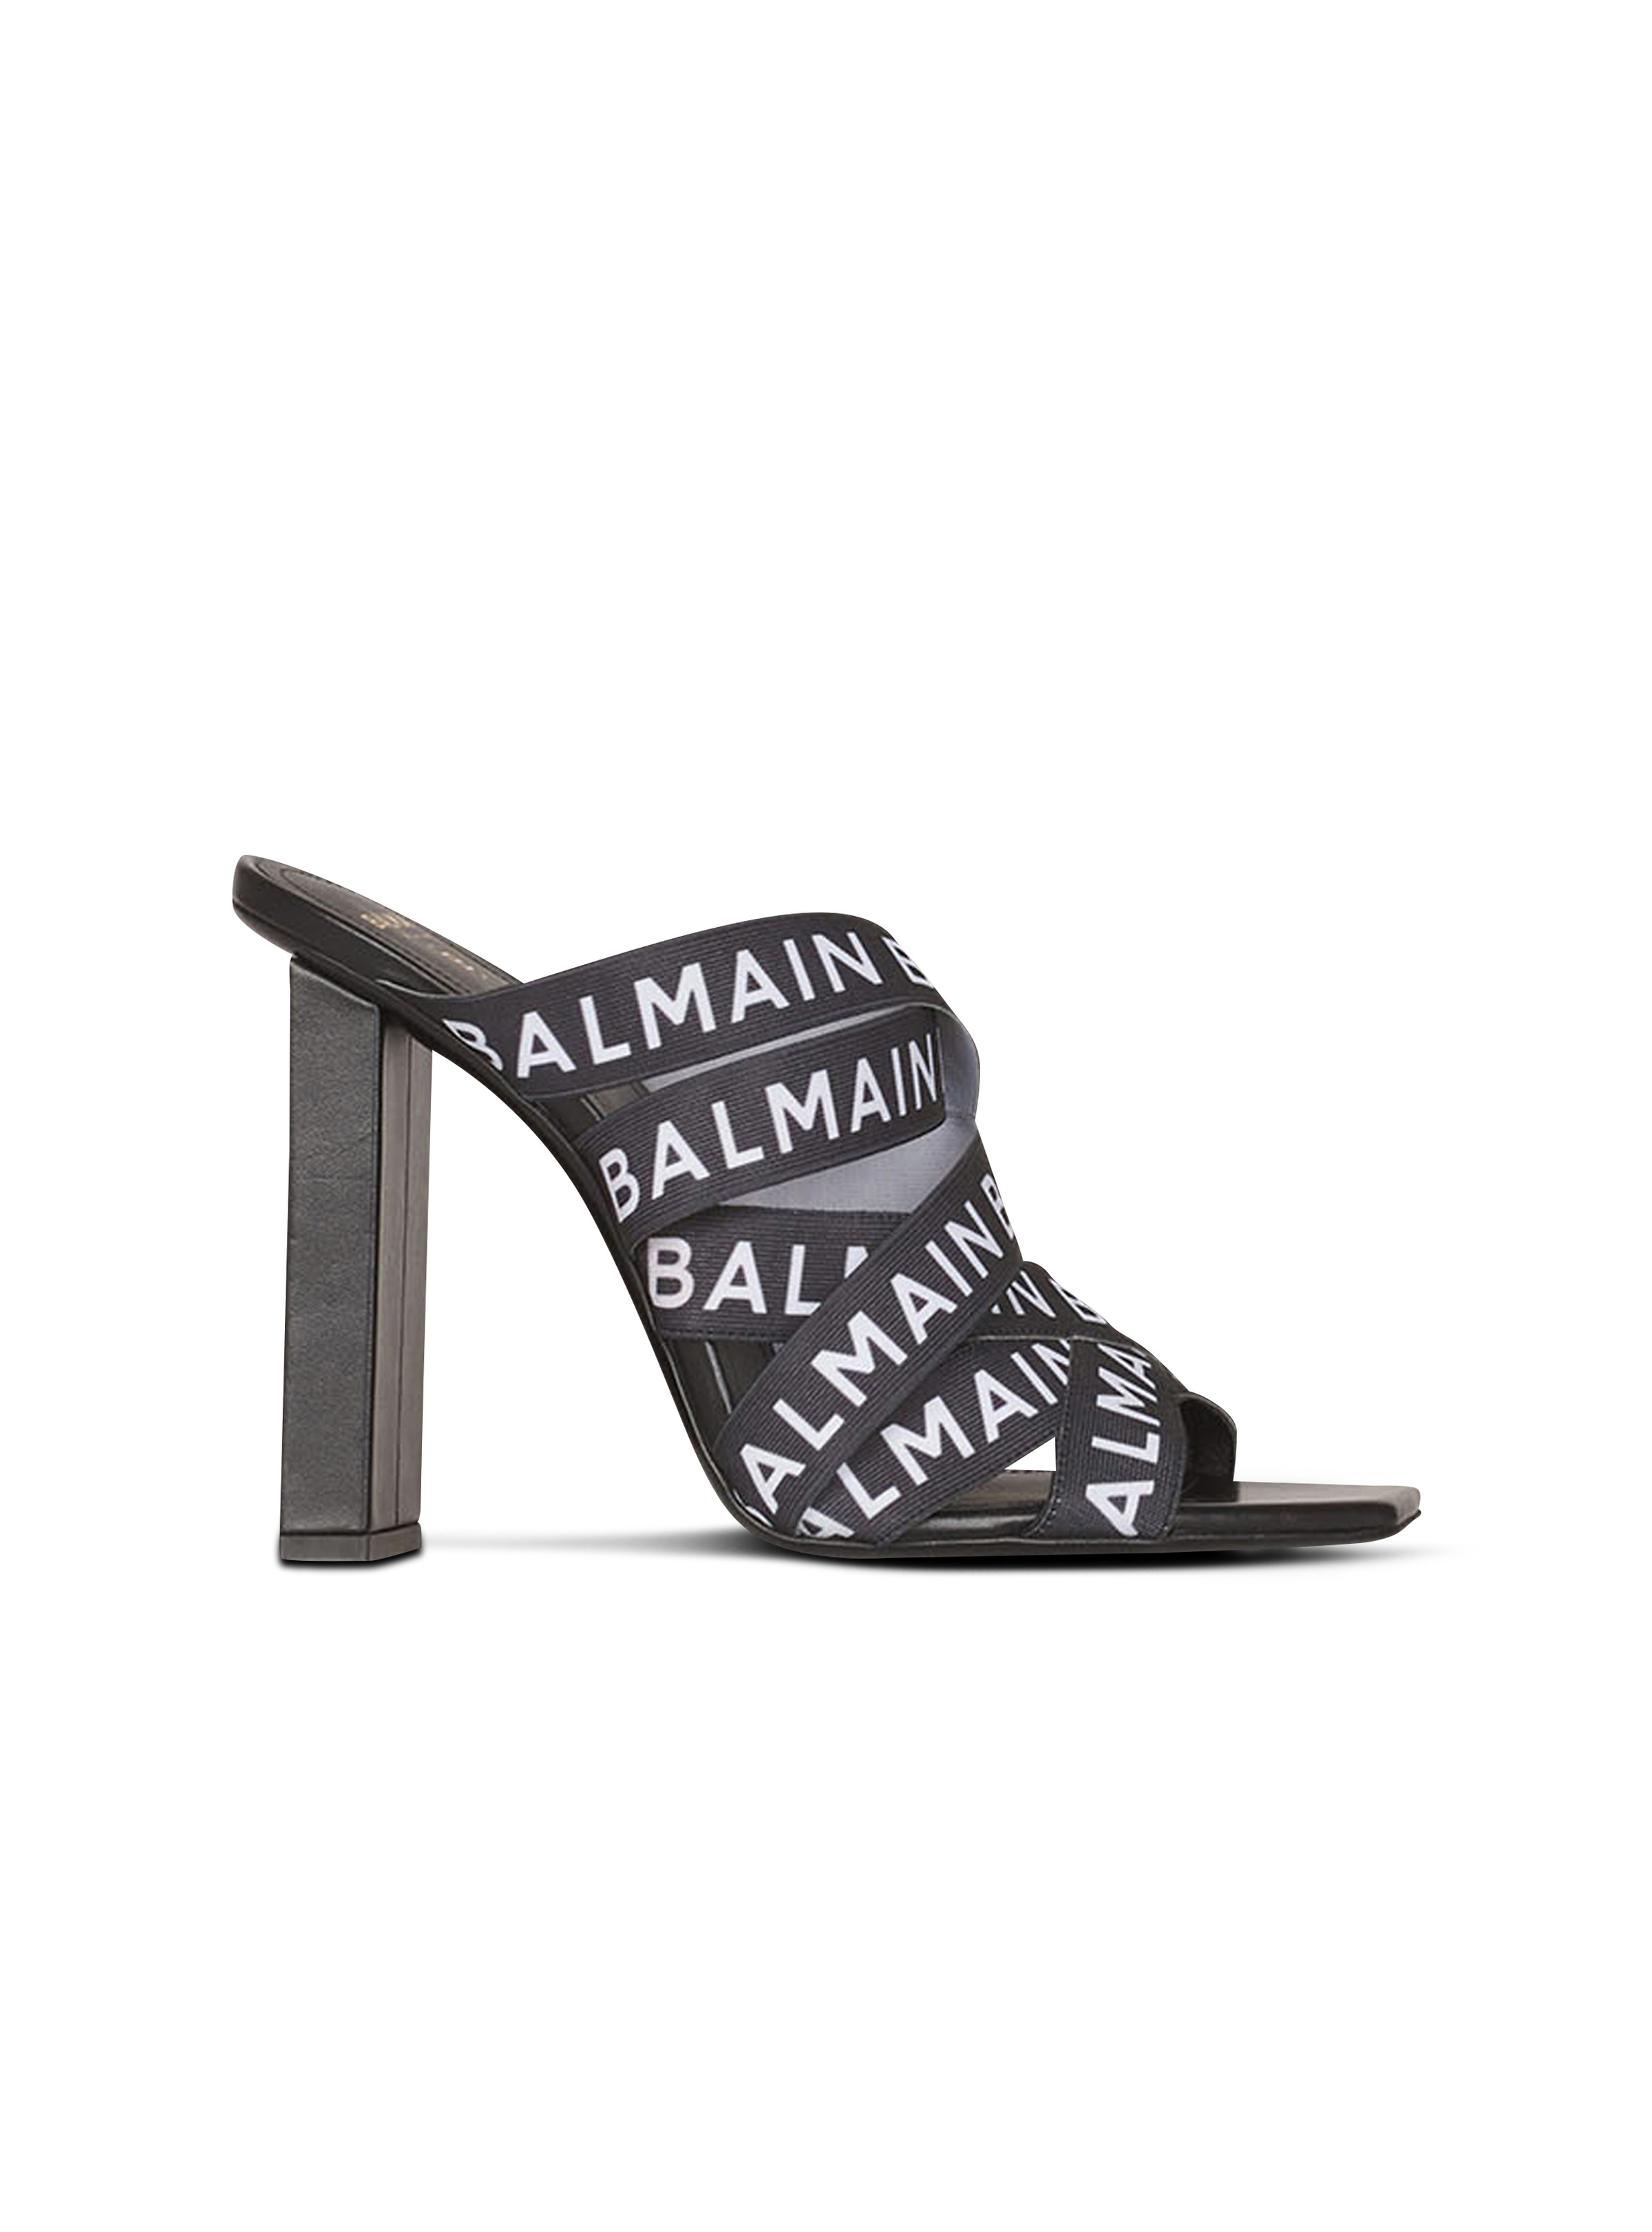 Union sandals with Balmain logo print - 1